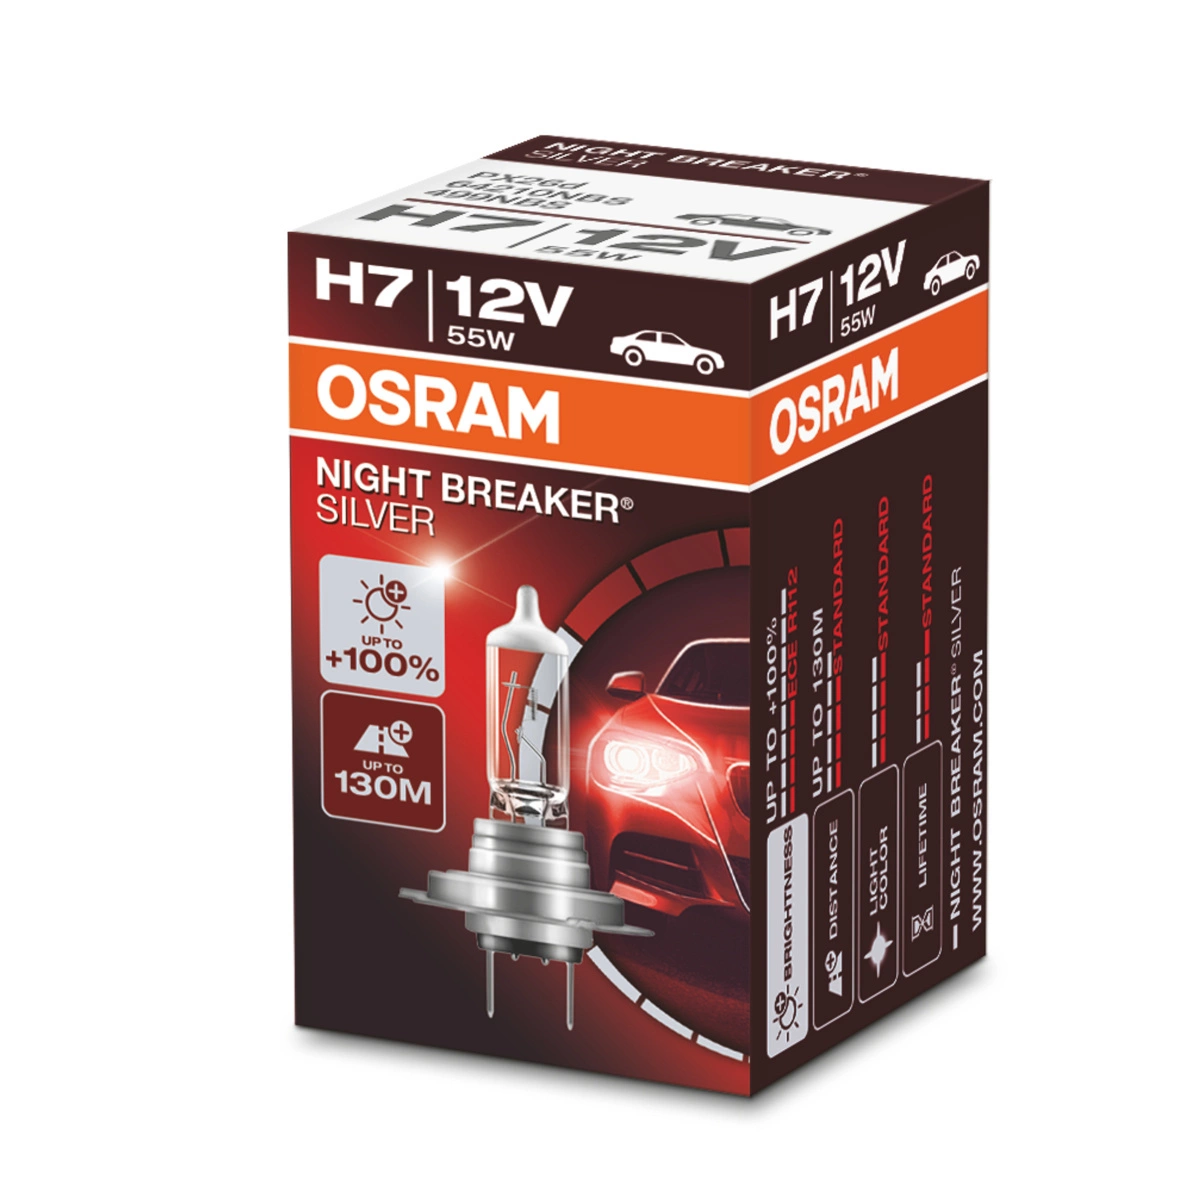 Osram H7 Night Breaker Silver +100% - 1szt • autokosmetyki •